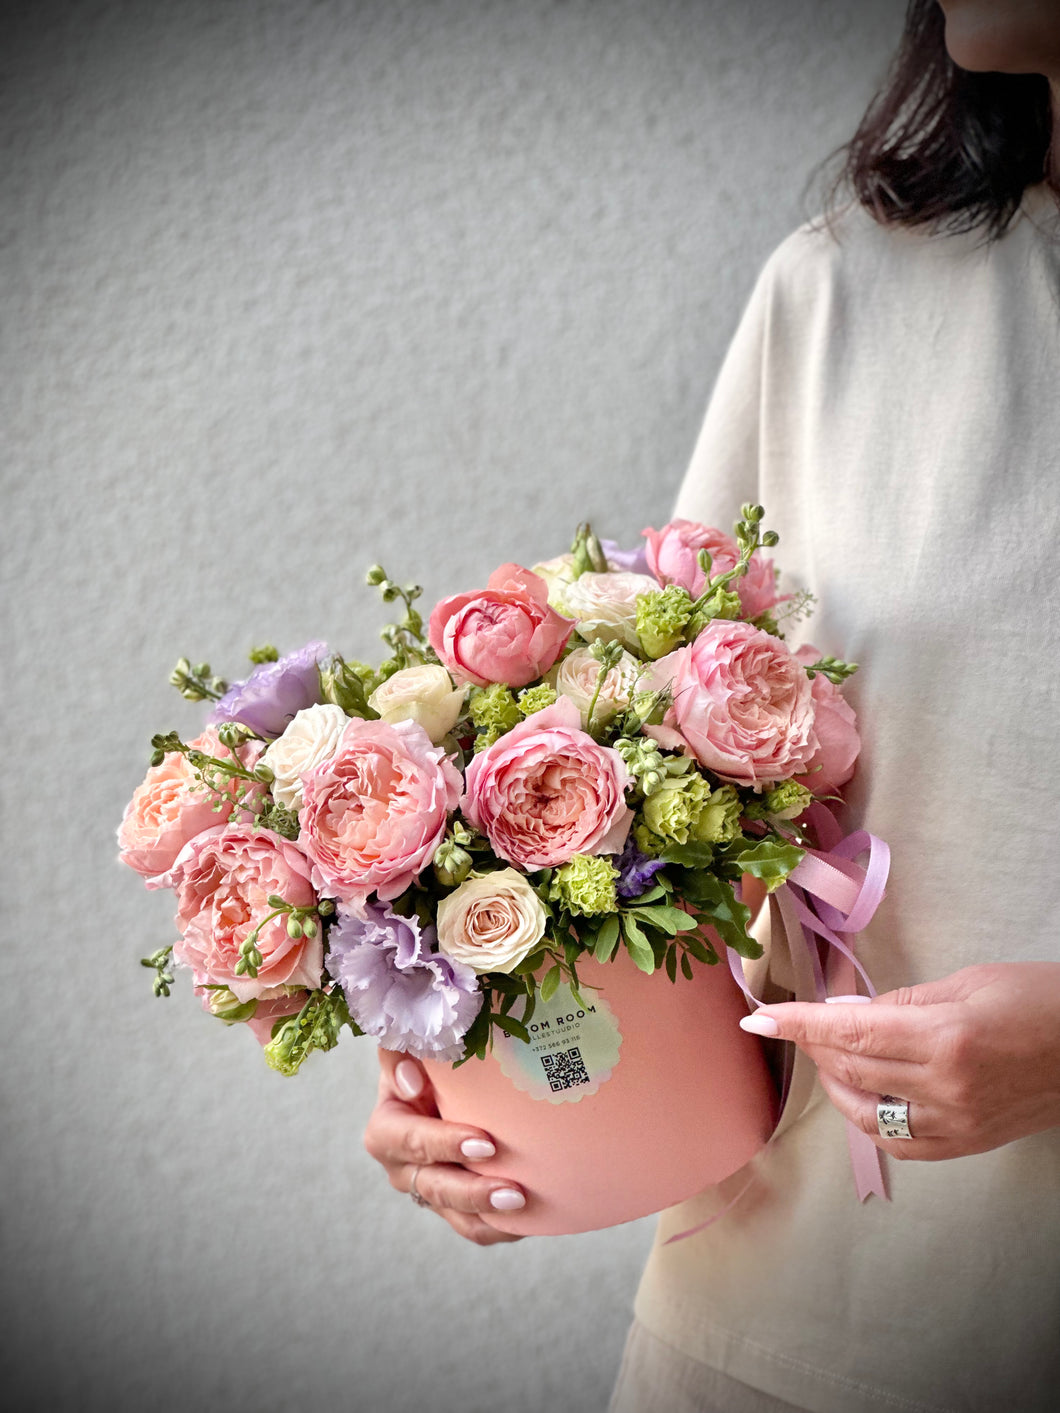 person, rose, wall, flower, vase, floral design, flower arranging, cut flowers, wedding dress, bouquet, bride